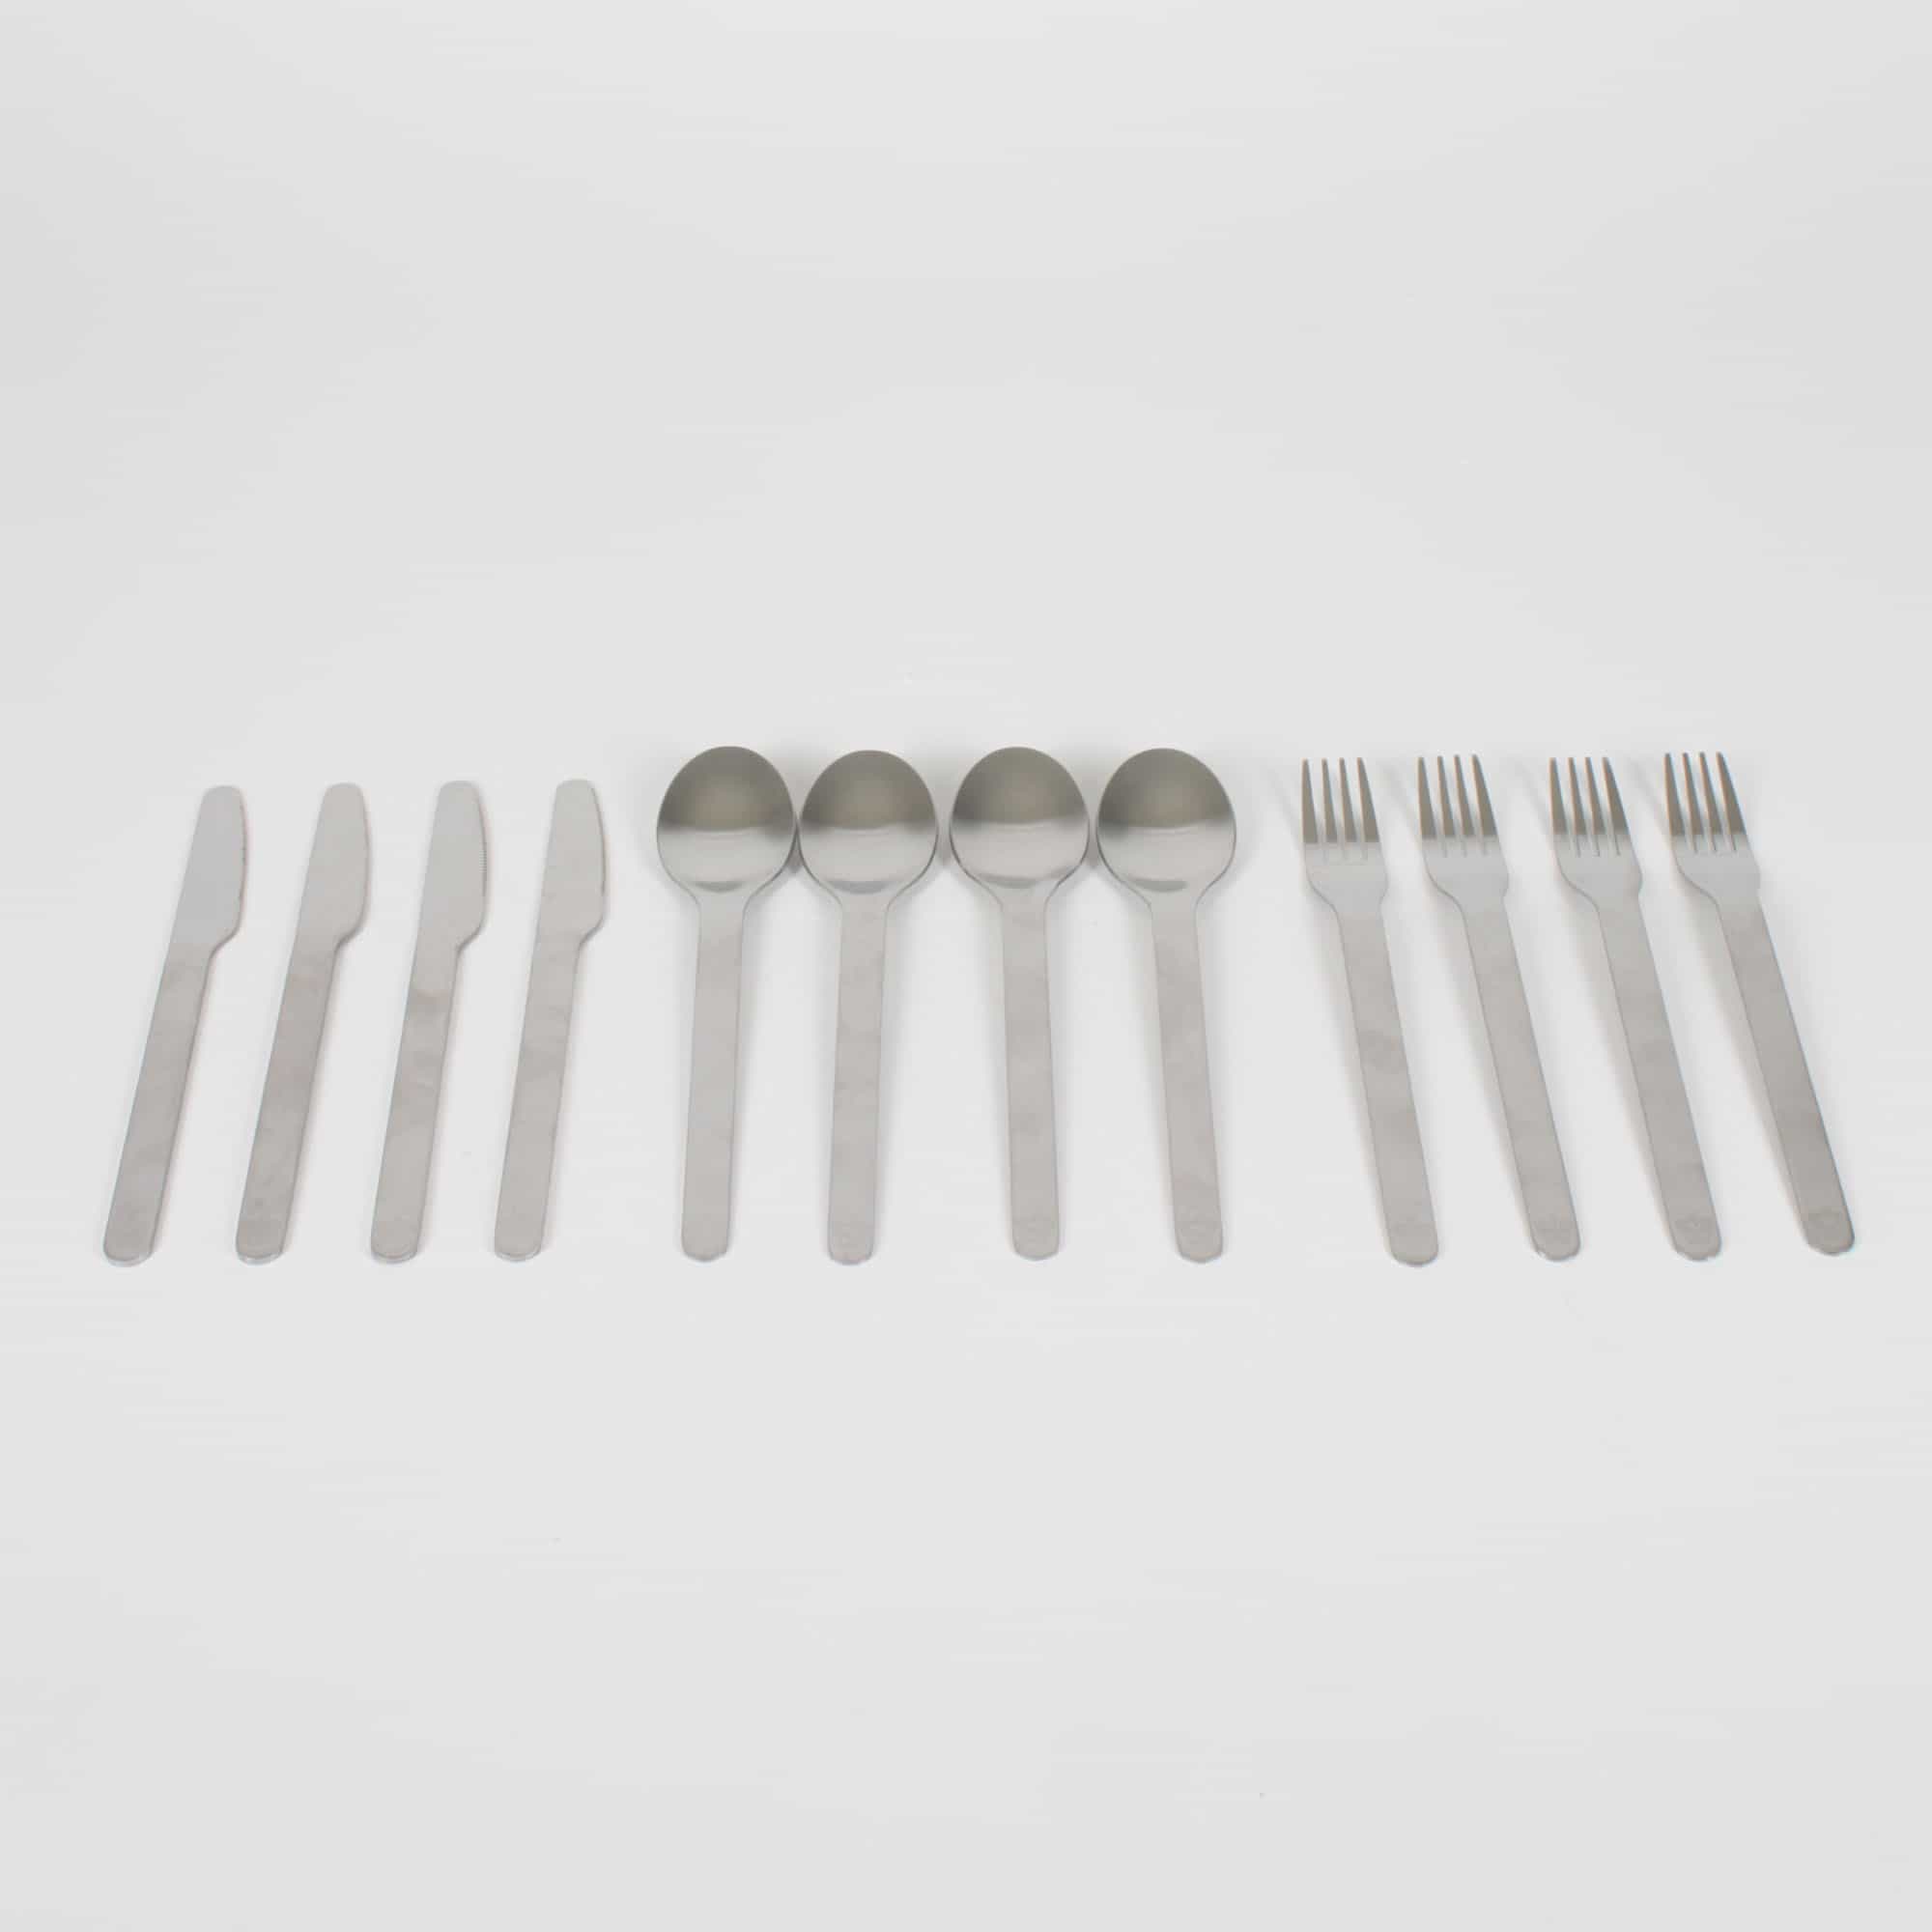 Steel Cutlery Pick Up Stainless Steel Set of 12